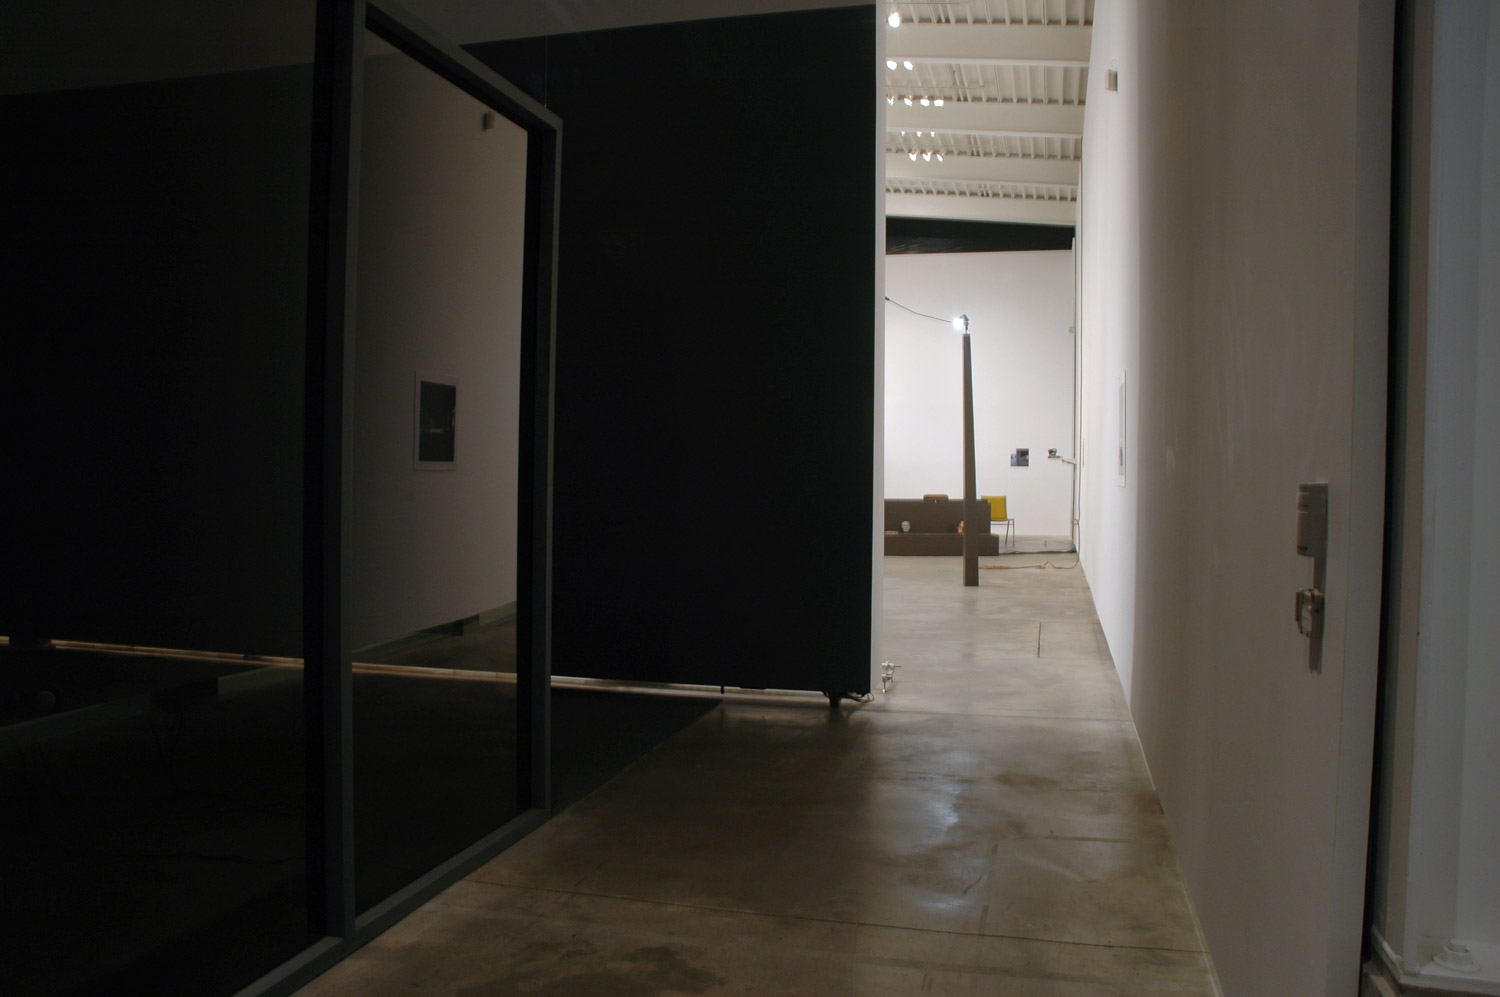 Hallway with Screening Room
